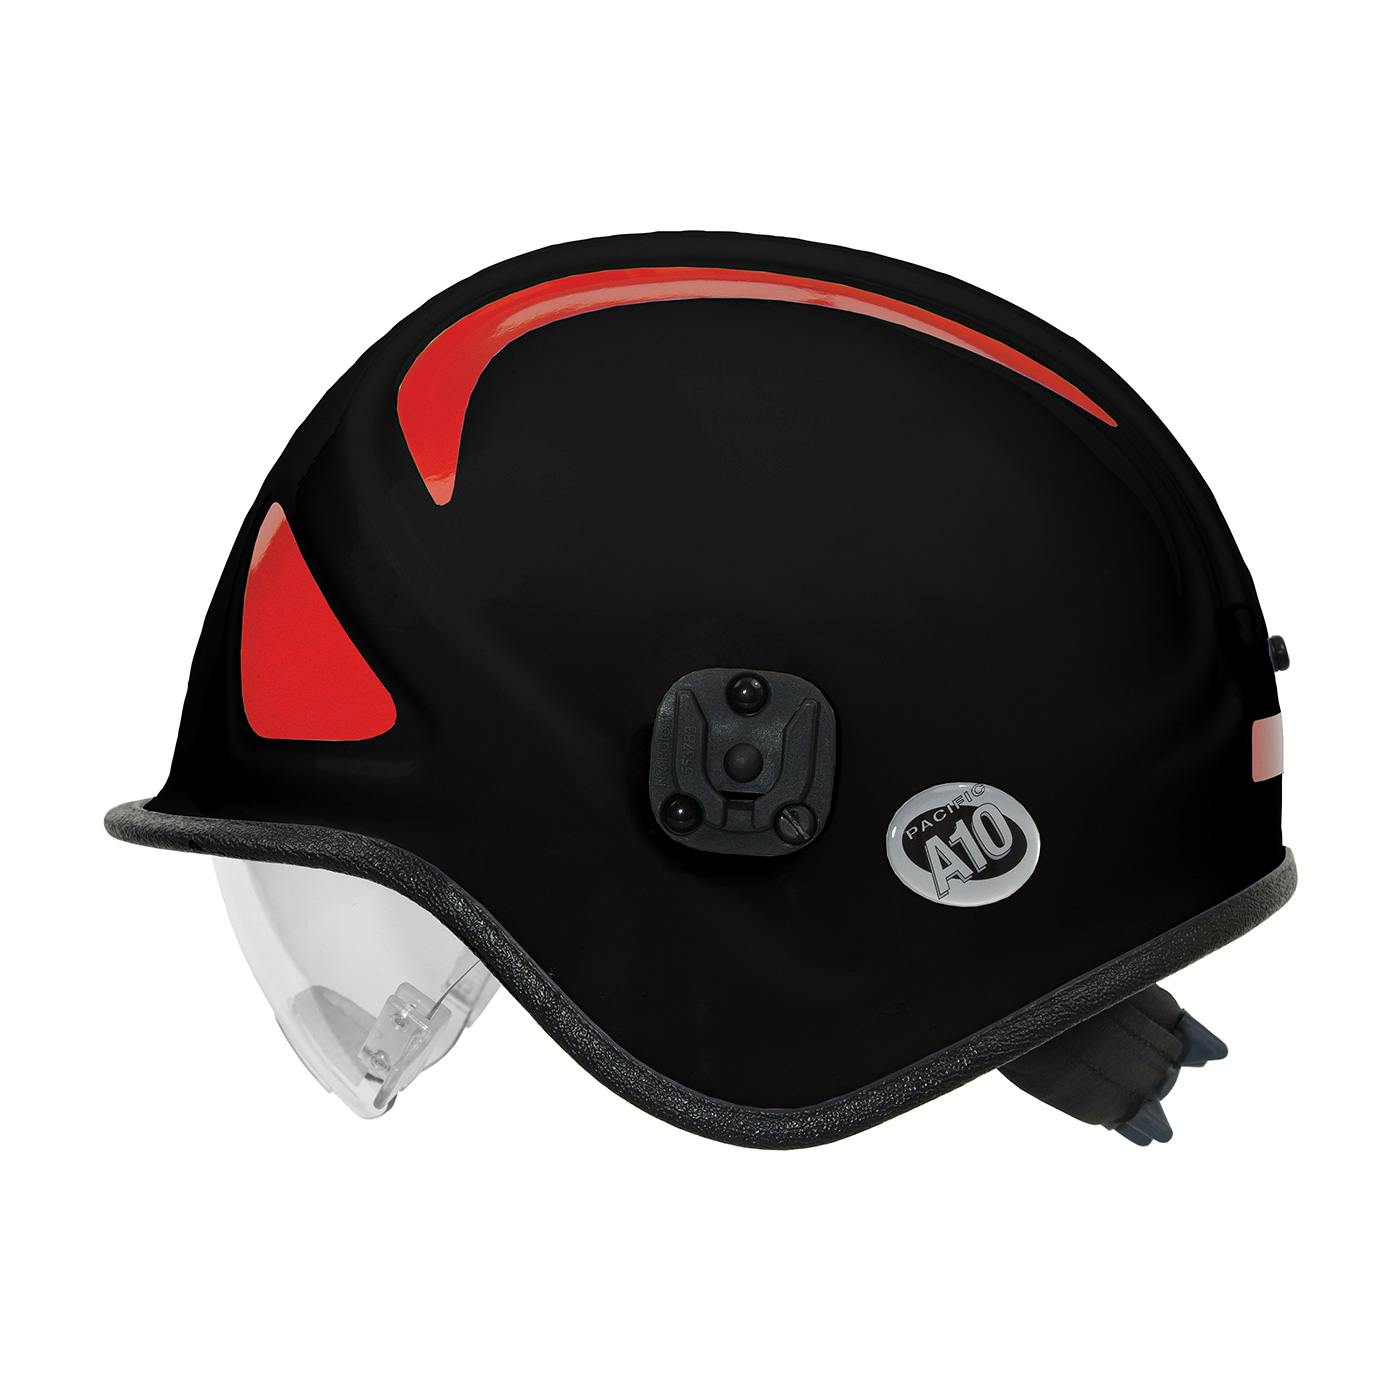 A10™ Ambulance & Paramedic Helmet with Retractable Eye Protector (813-32XX)